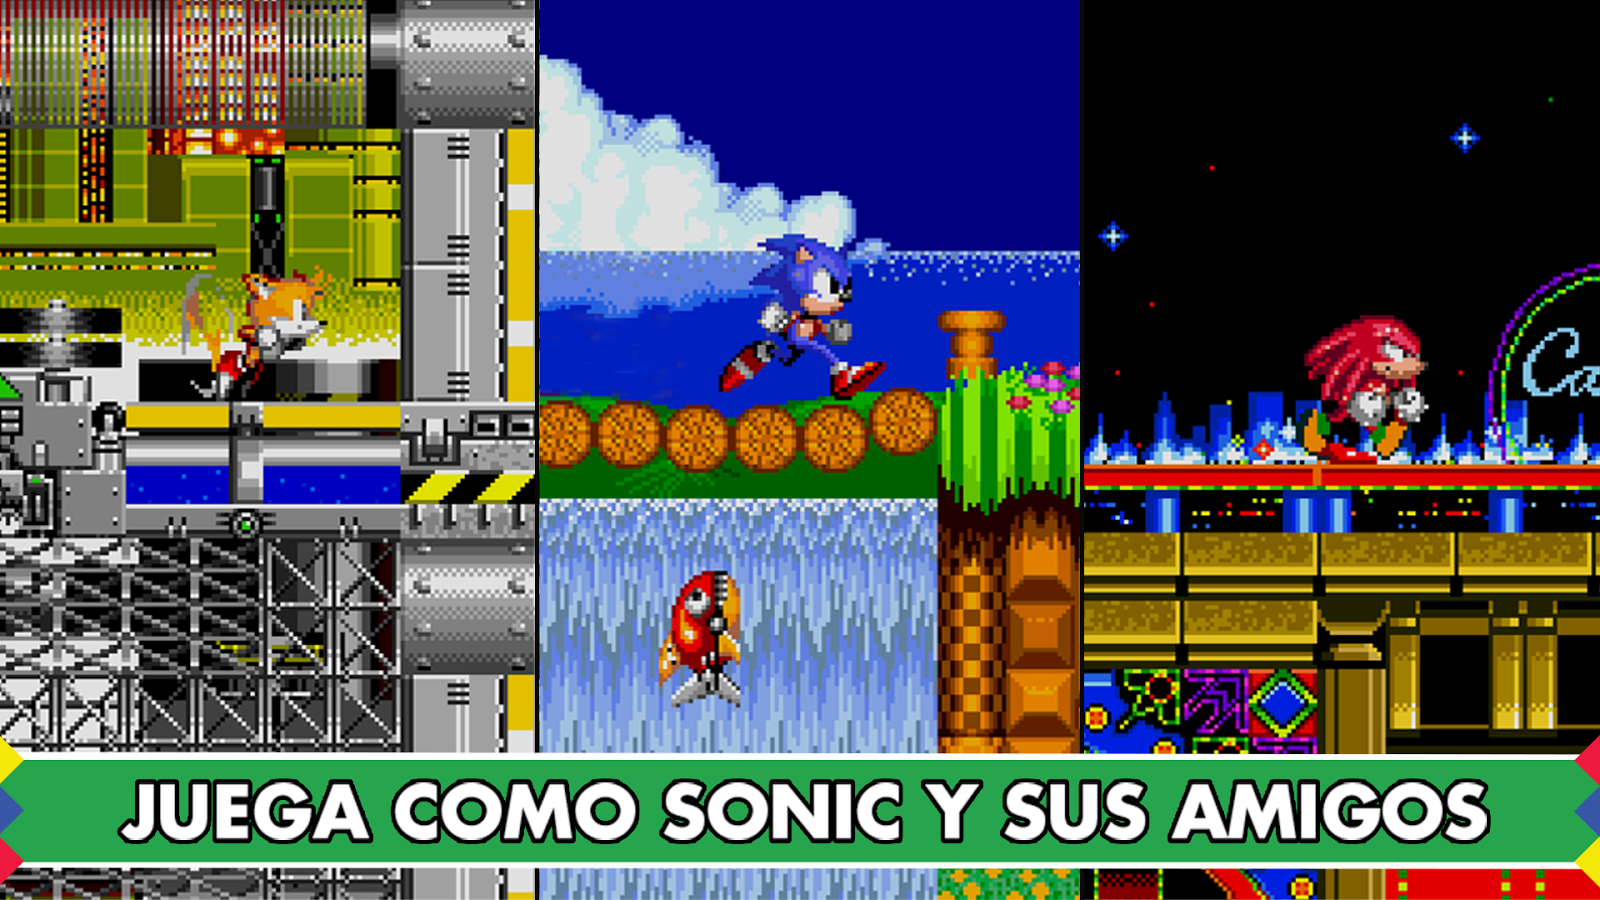 Sonic The Hedgehog 2 V3.0.2 Apk Full [Zippyshare] H8Rnzo3M5SA2s_DXOtiSMRZMUQLNTfWVxAVjx1OEYEOfO6UaG9uvpe23s8GWTWQiZgc=h900-rw